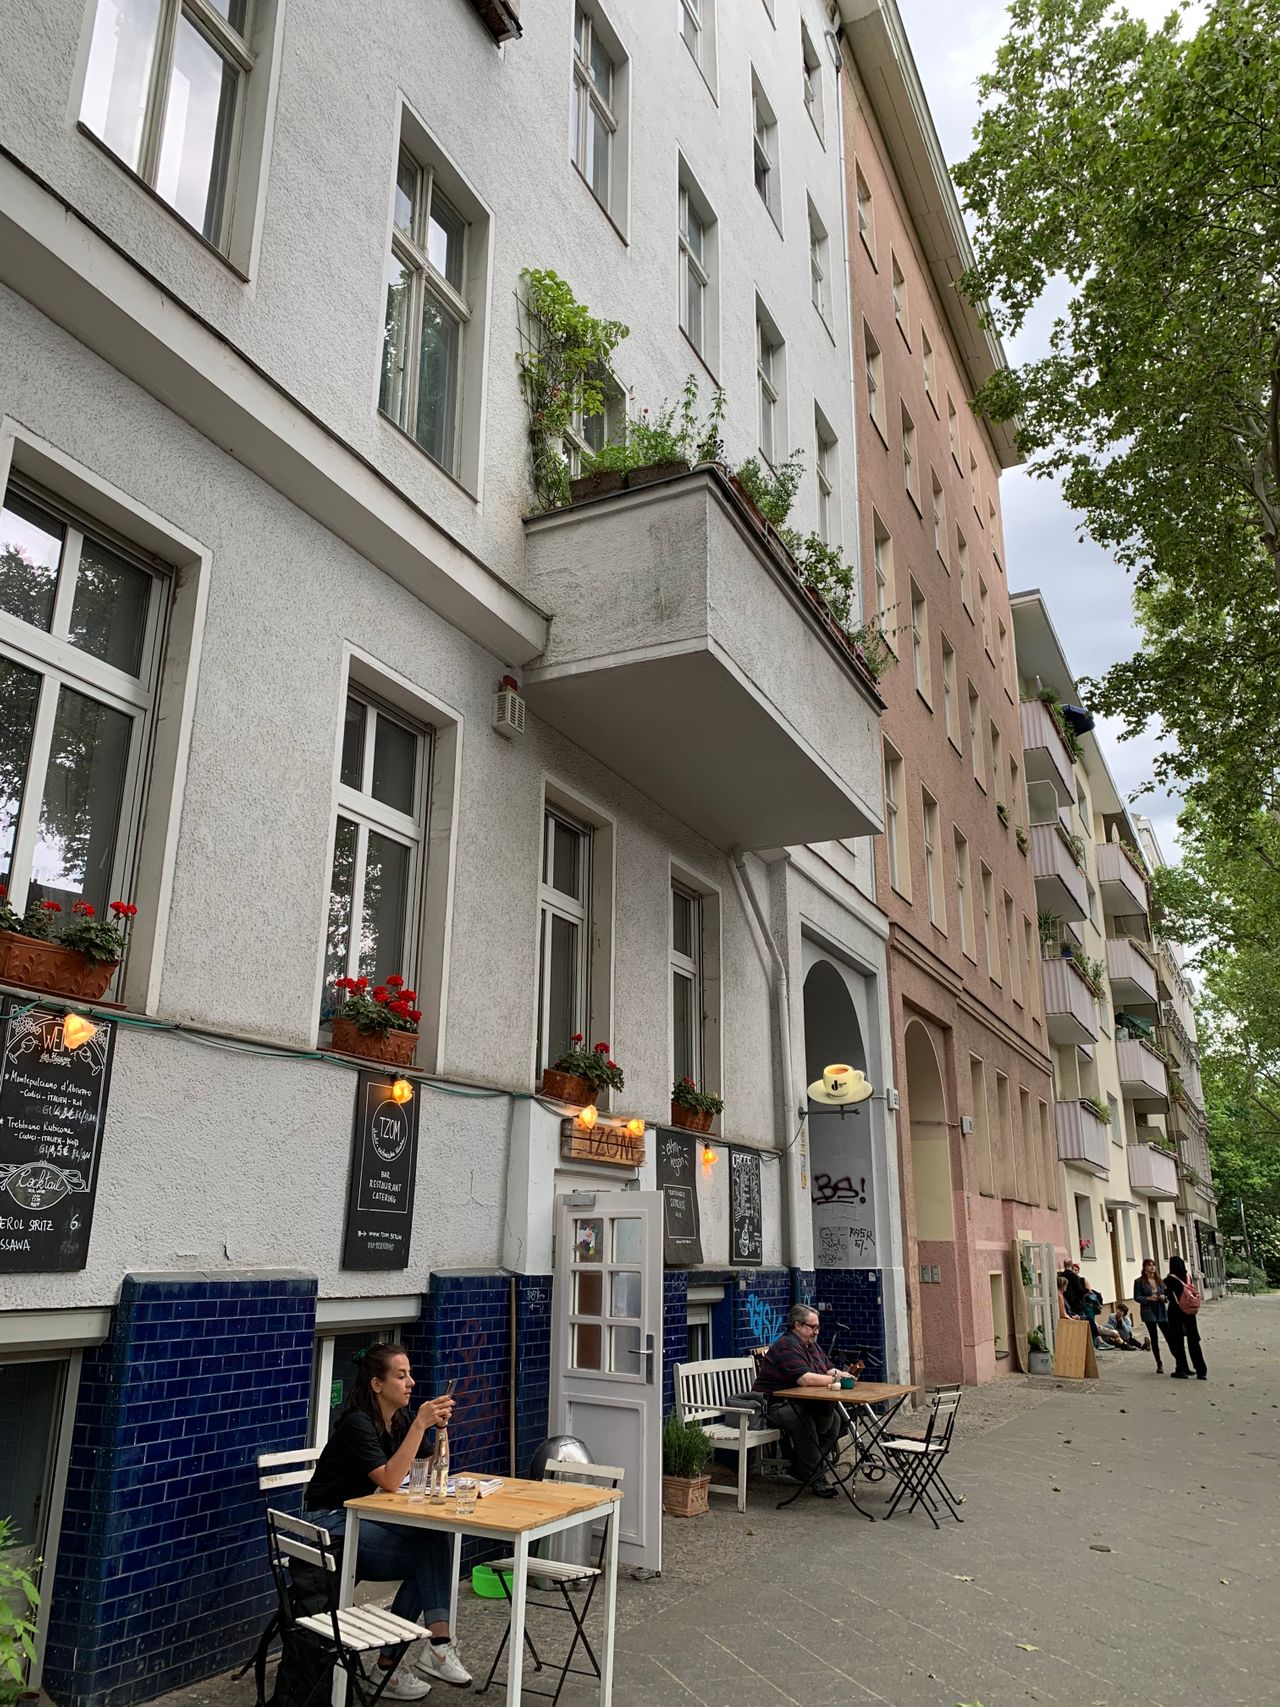 Modern fully furnished apartment in the heart of Graefekiez (Kreuzberg)